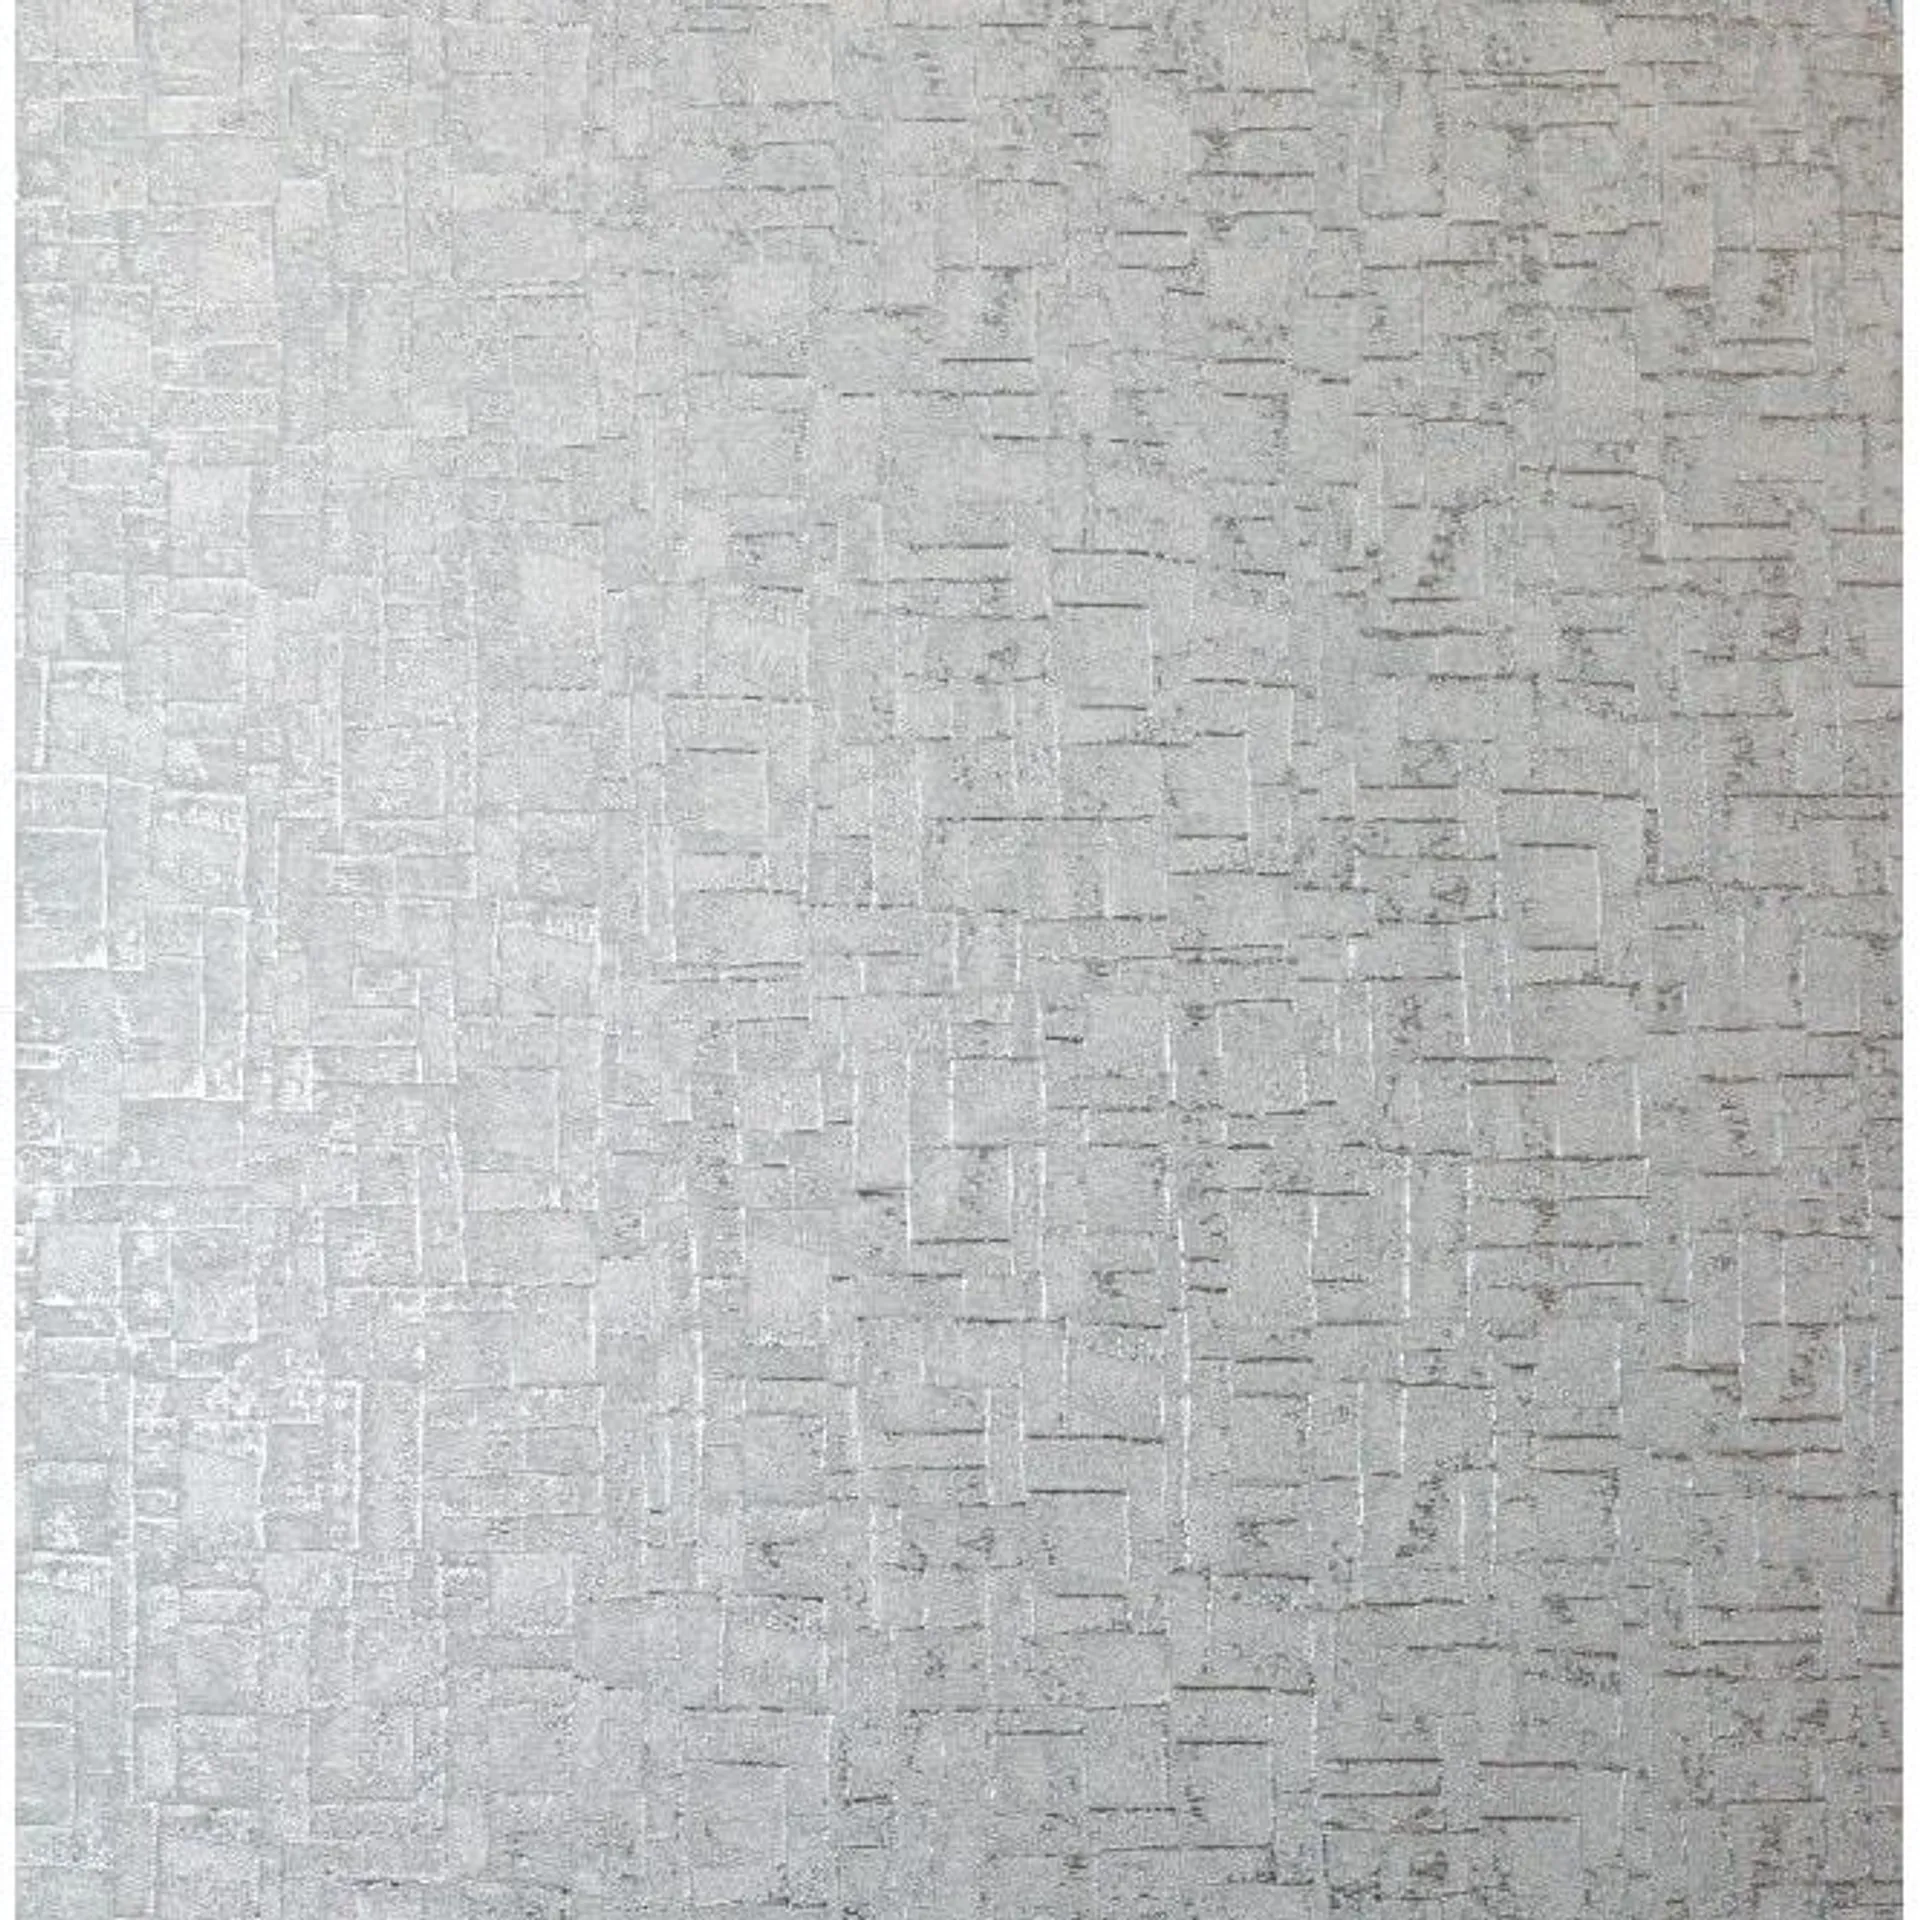 Basalt Texture wallpaper in Silver